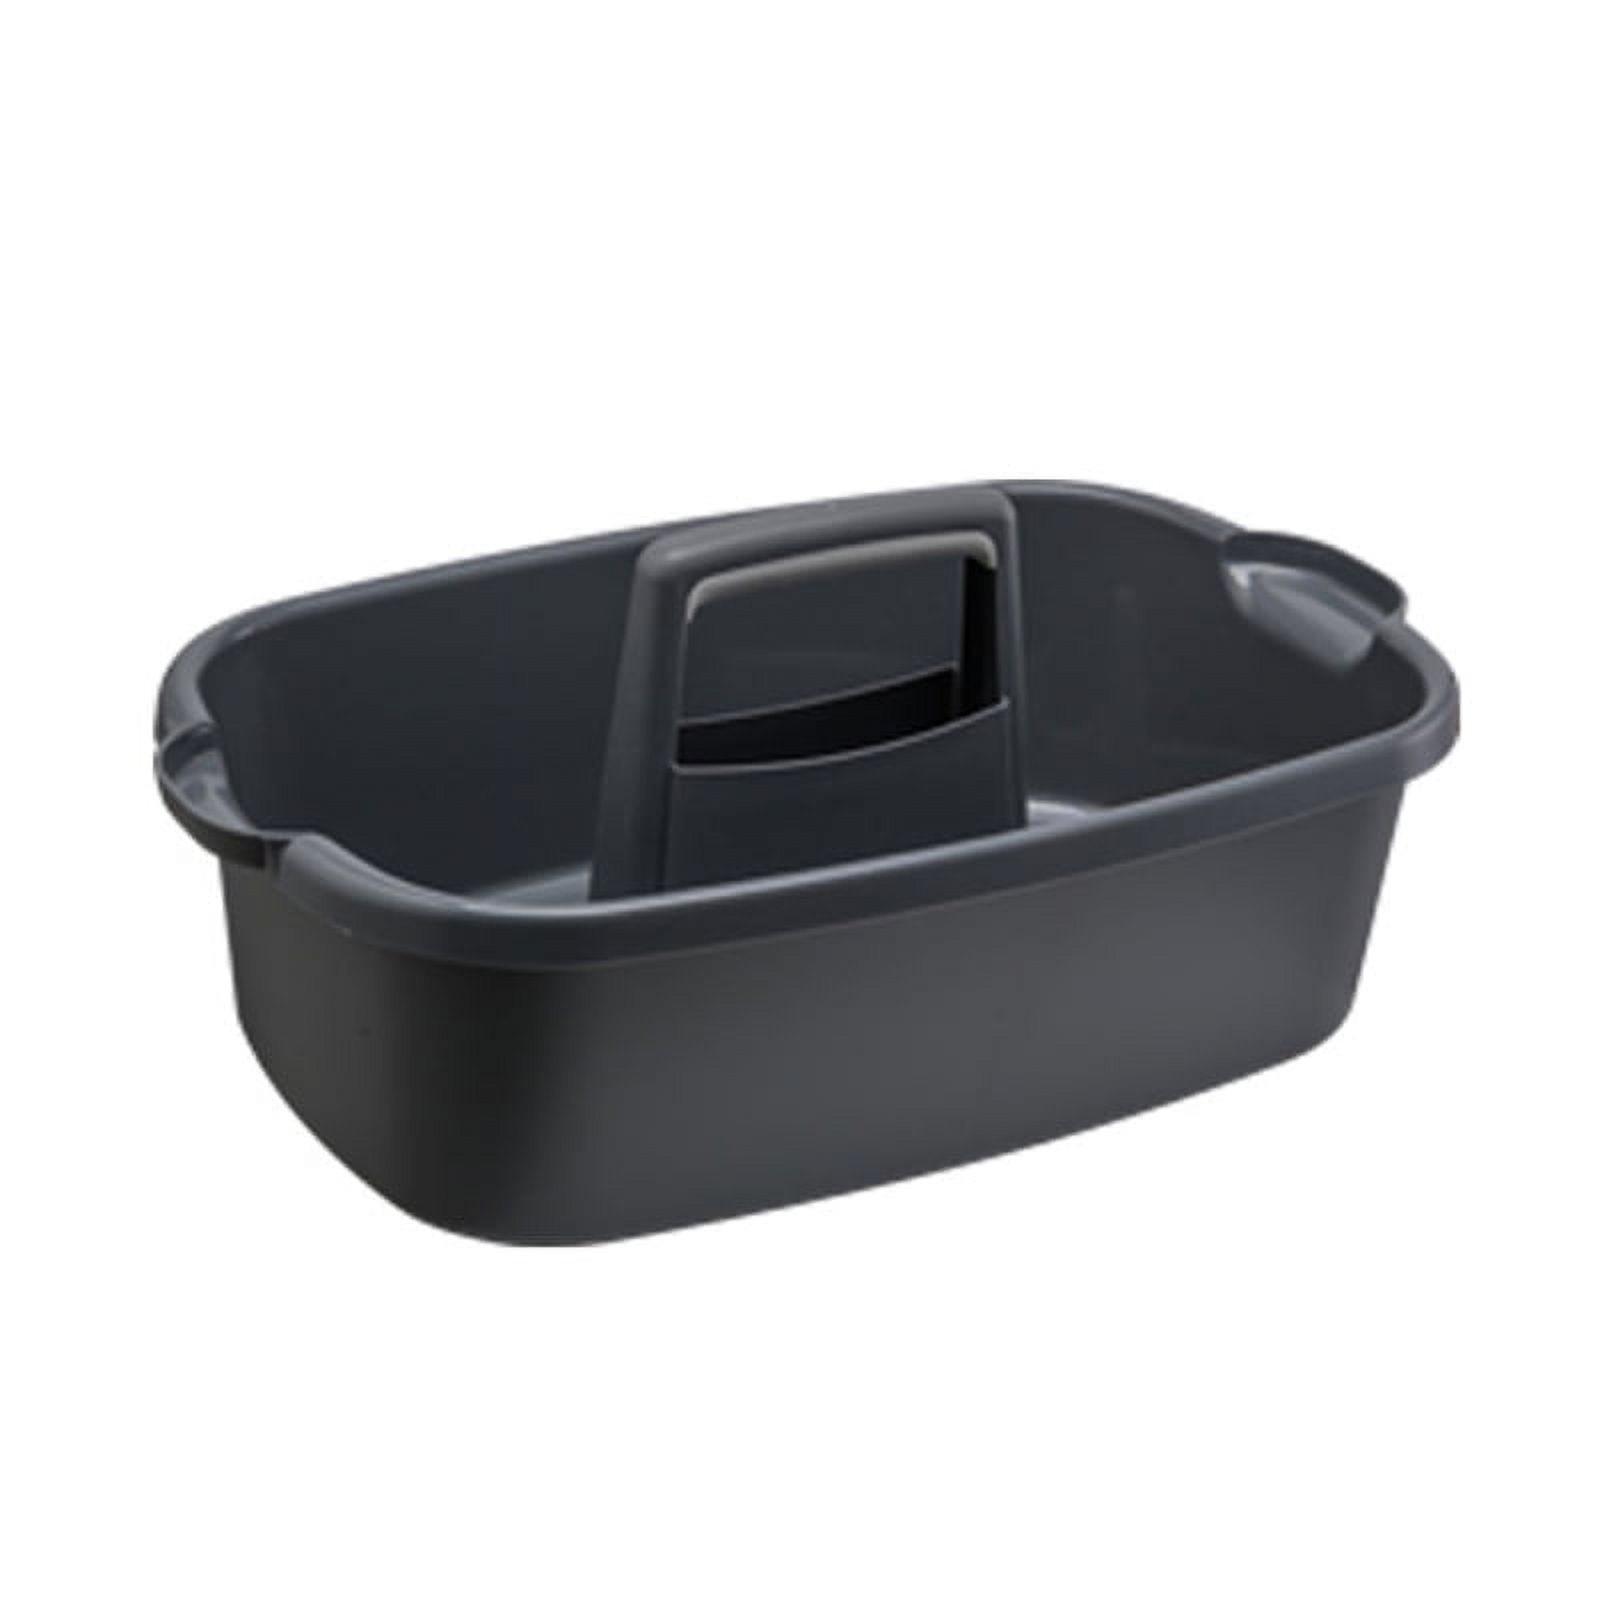 Portable Bathroom Basket, Cleaning Supply Storage